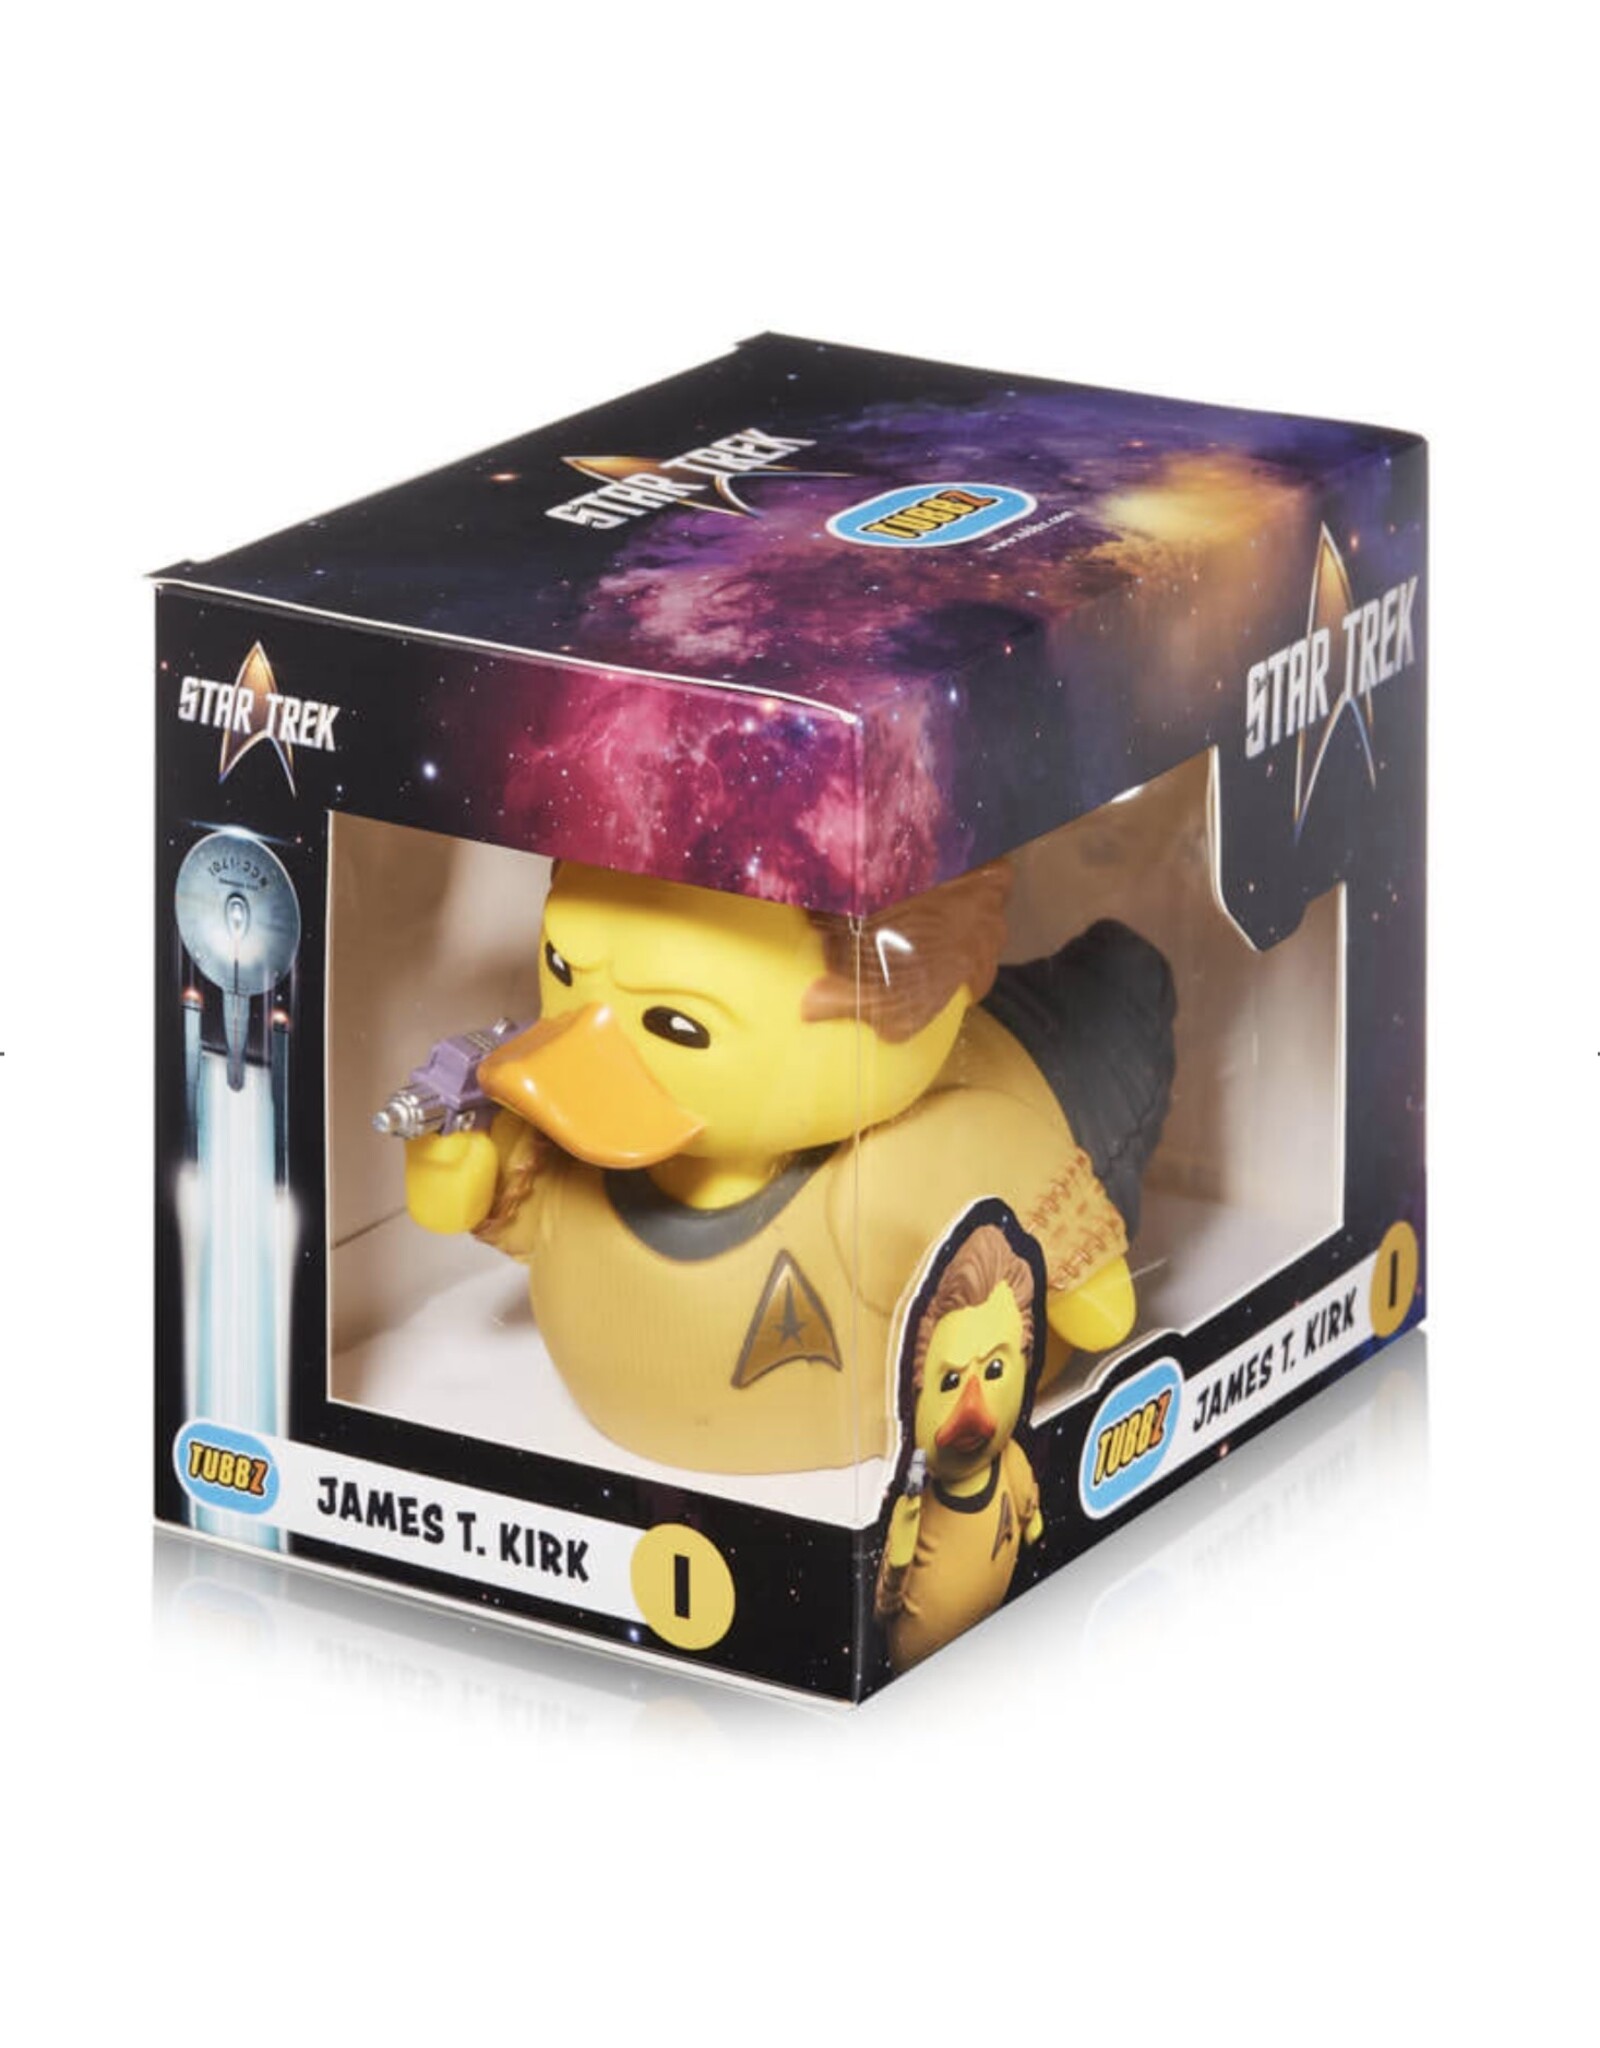 Tubbz Star Trek Captain James T. Kirk Rubber Duck by TUBBZ - Boxed Edition